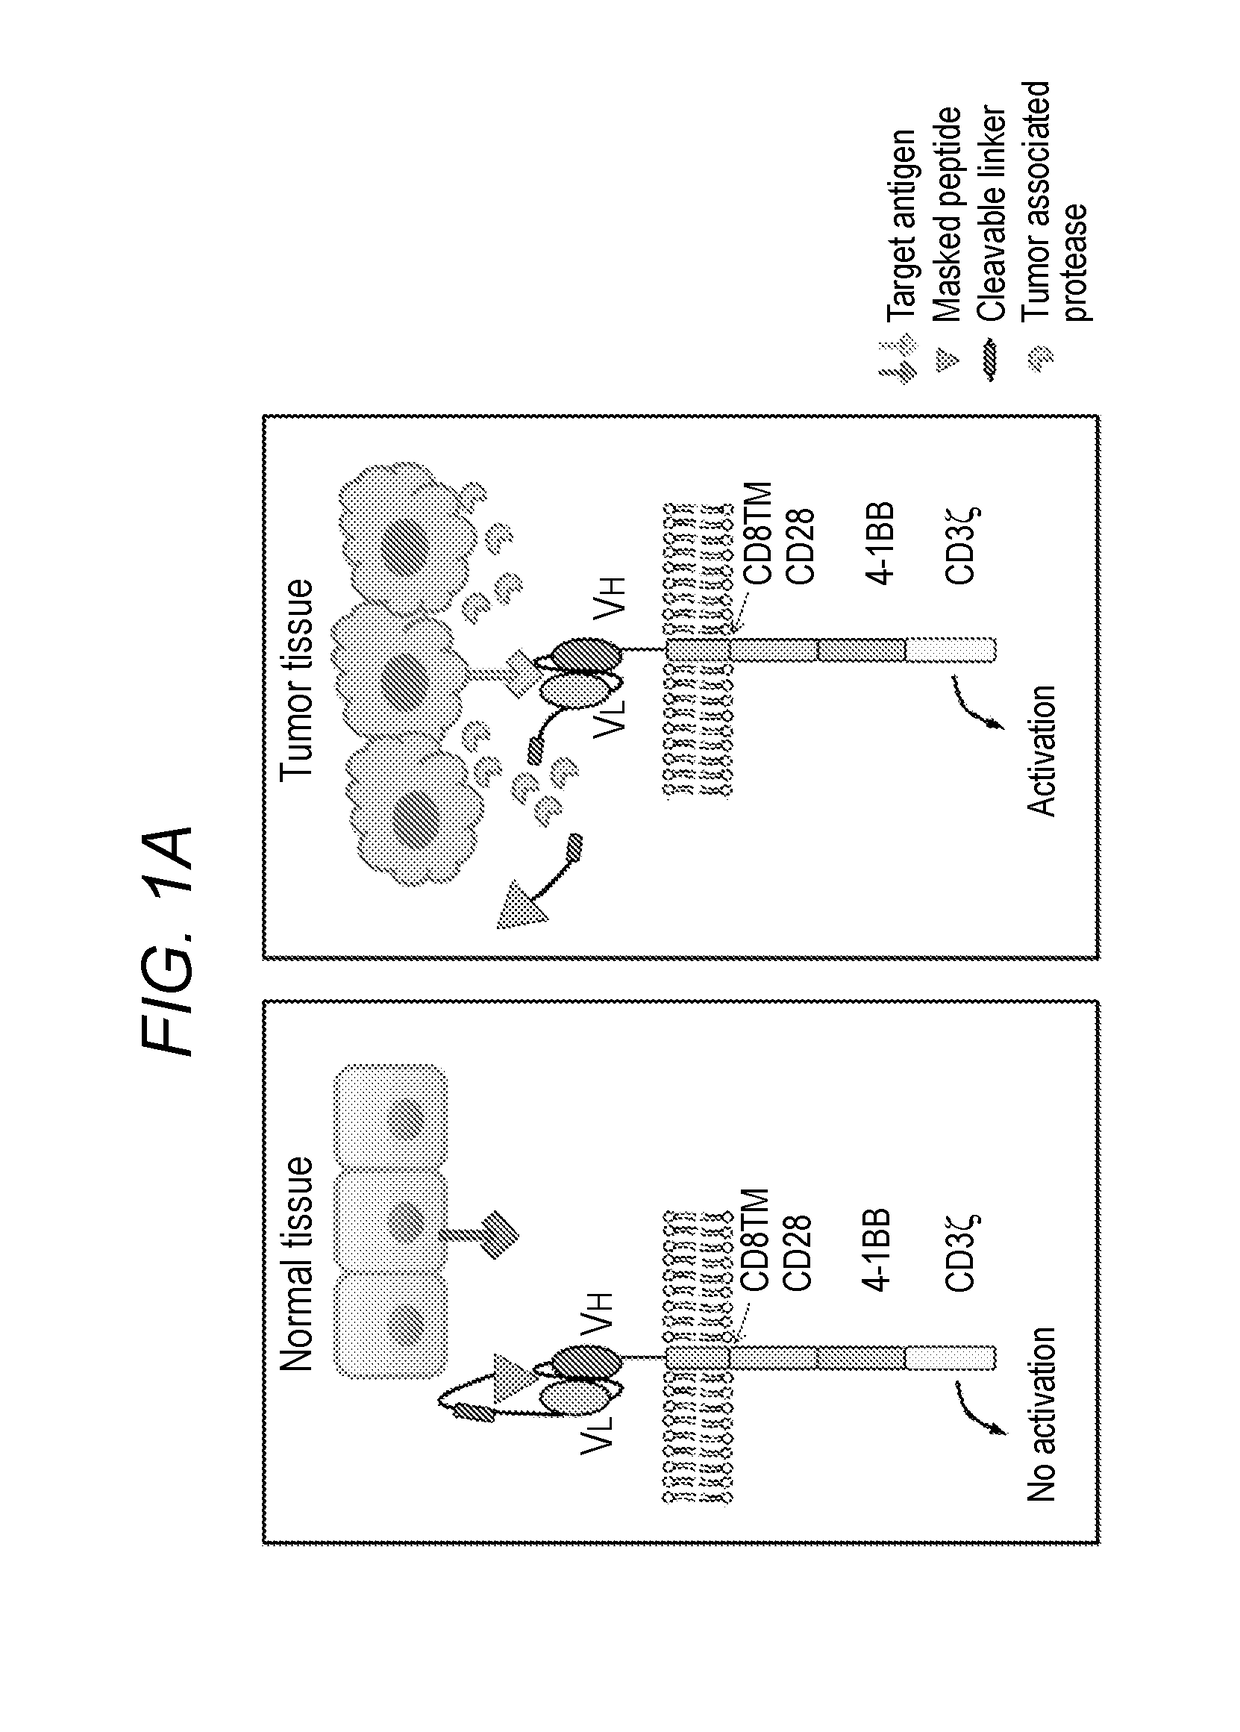 Masking chimeric antigen receptor t cells for tumor-specific activation